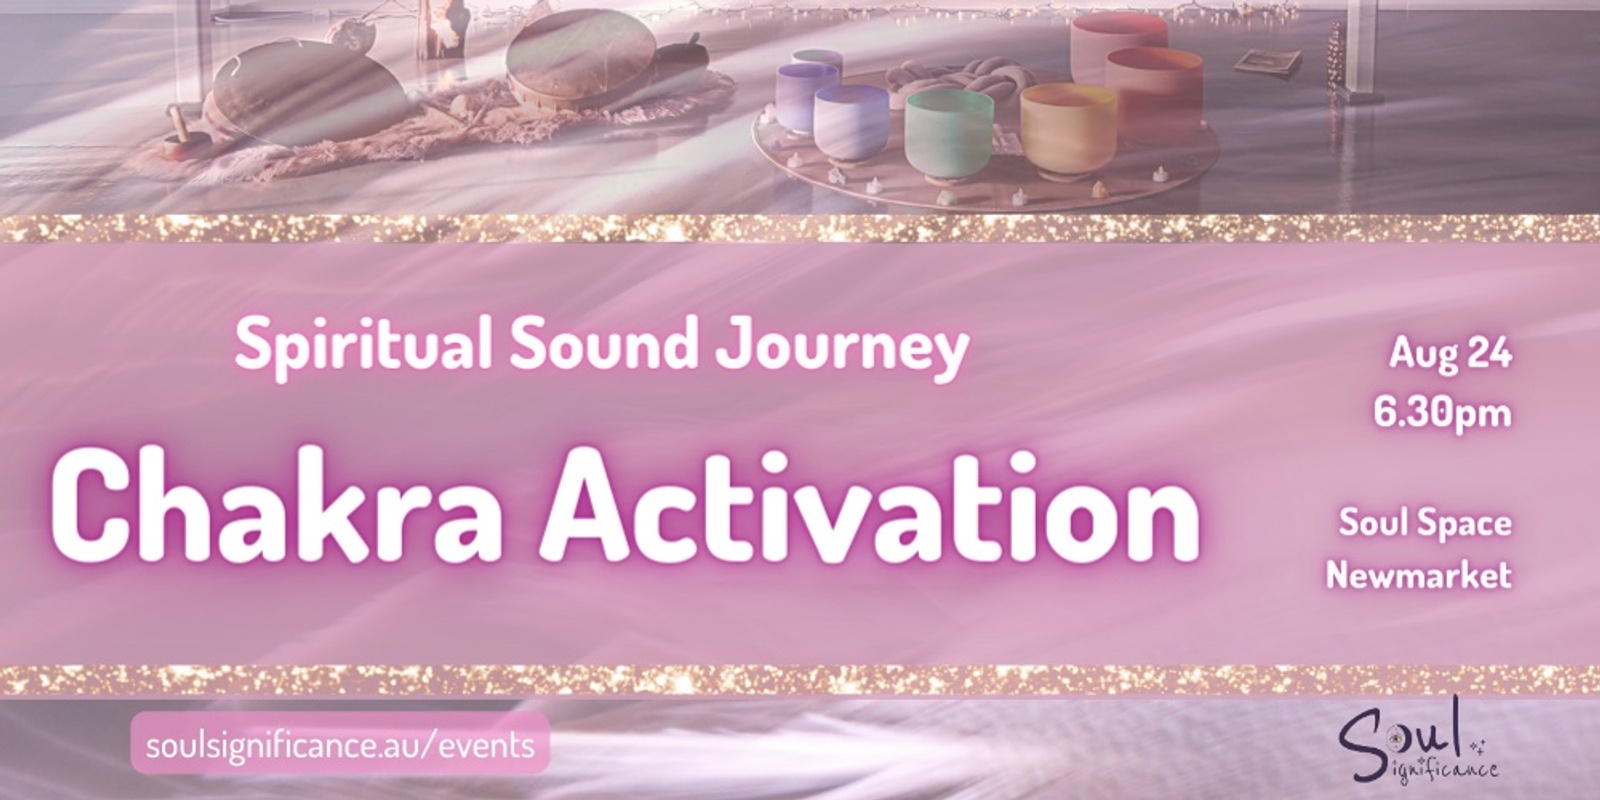 A Spiritual Sound Journey - Chakra Activation